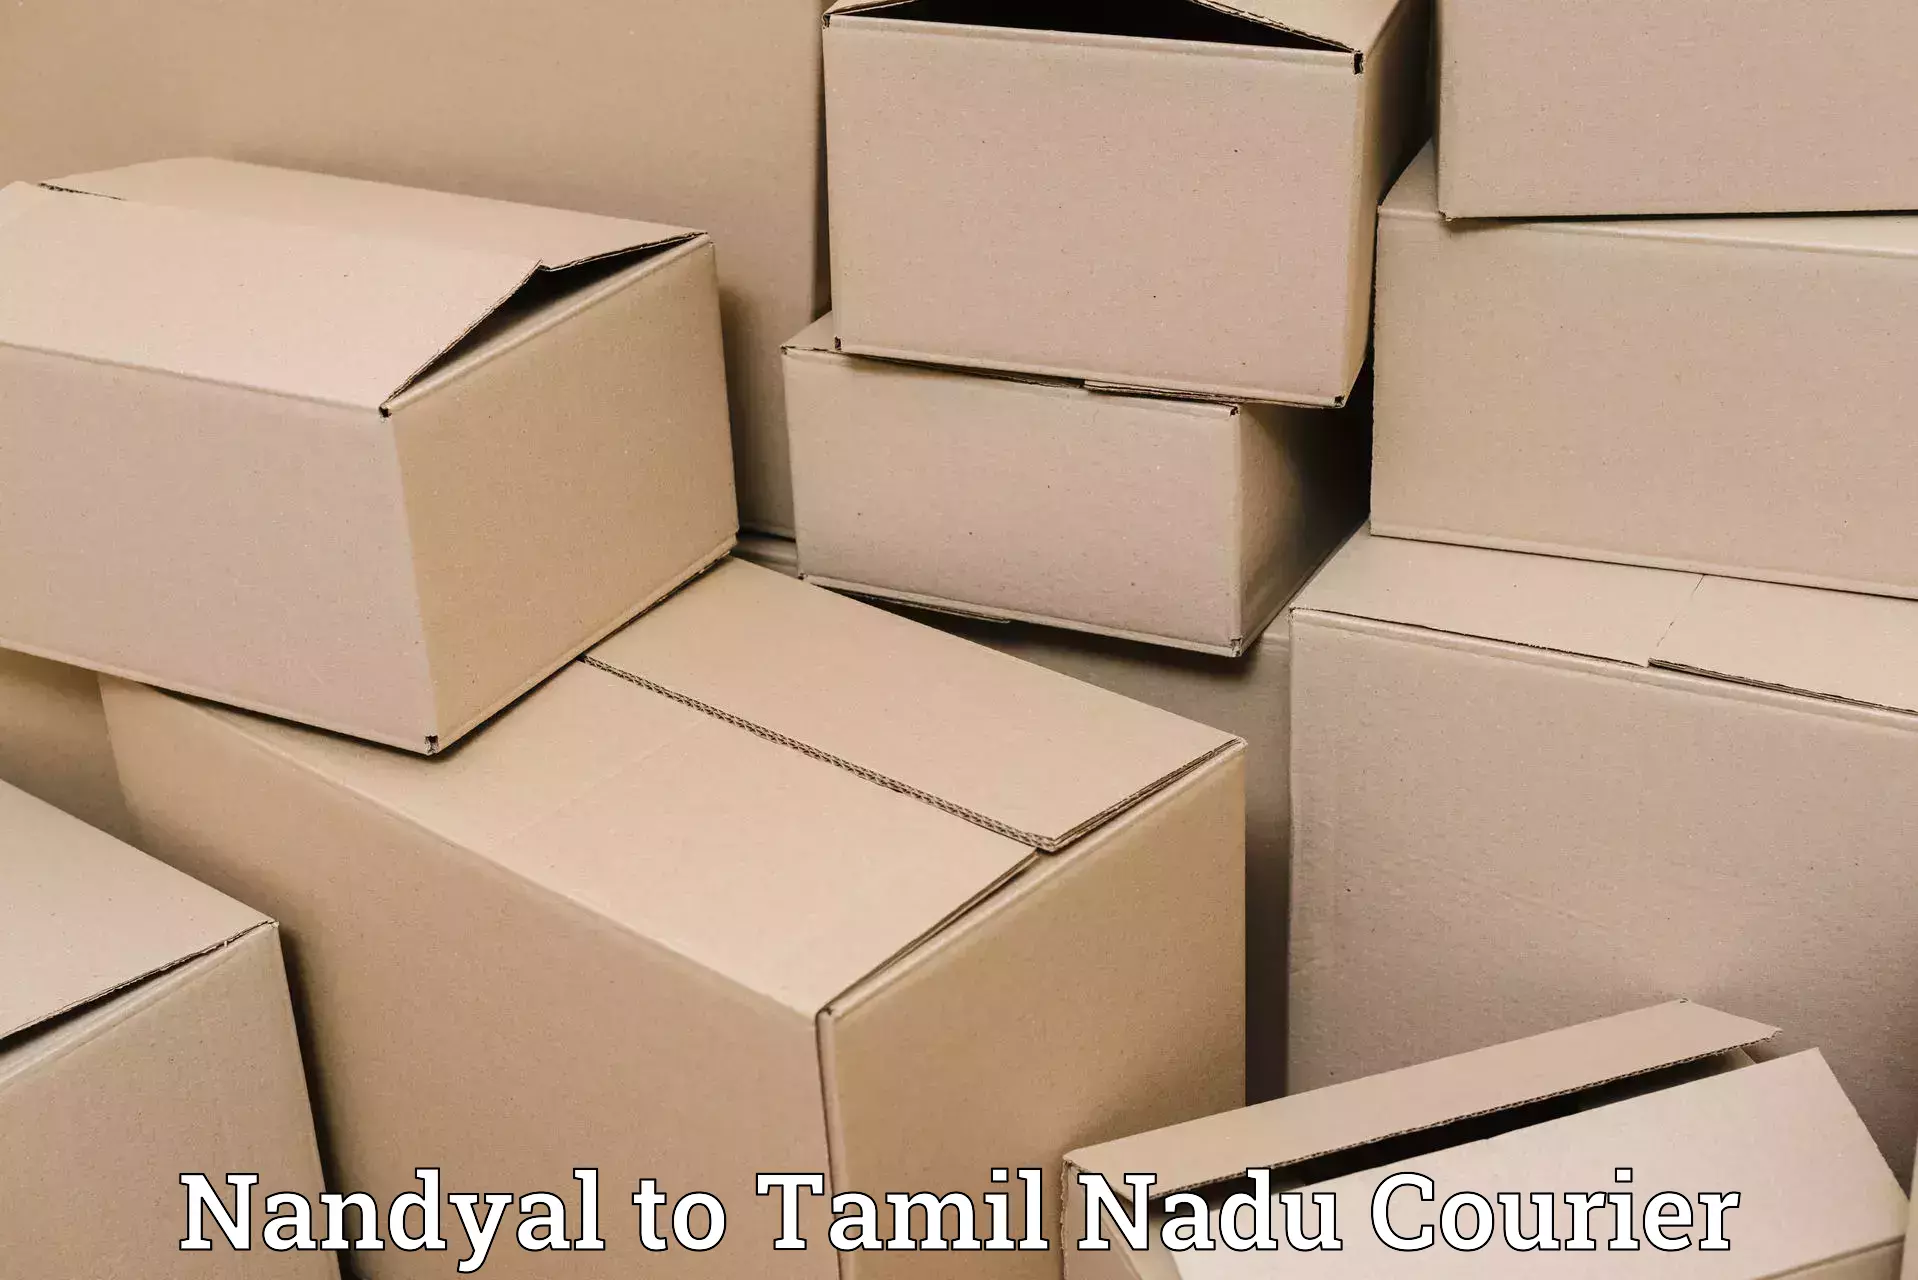 Specialized shipment handling Nandyal to Vriddhachalam